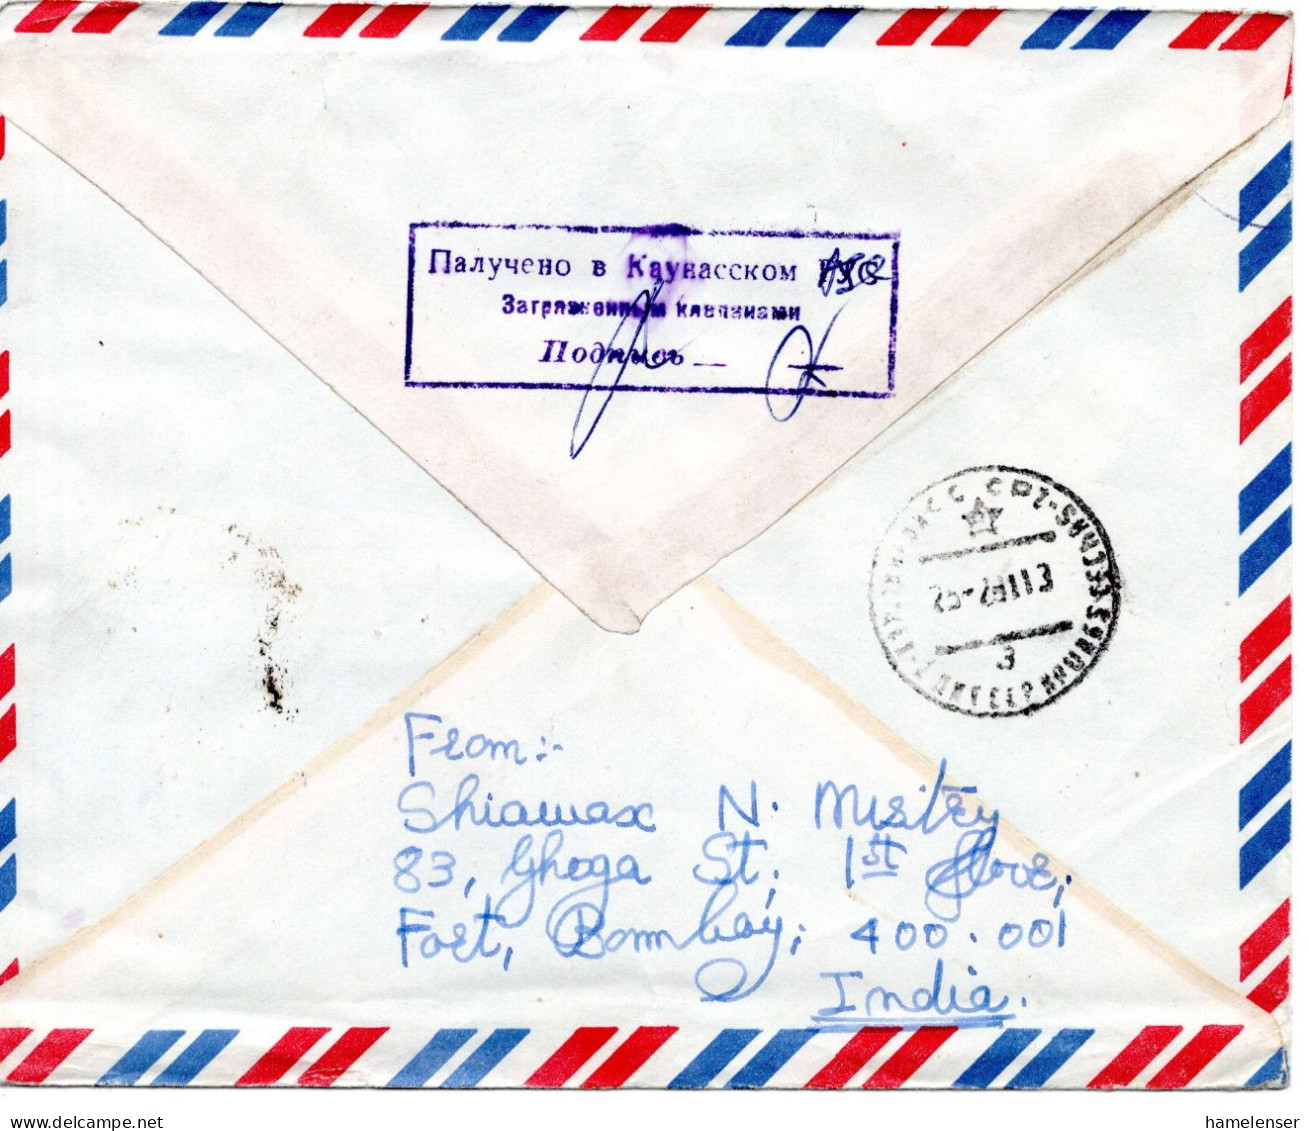 69279 - Indien - 1981 - 4@50p Kranich MiF A LpBf BOMBAY -> KAUNAS (UdSSR), Rs M Sowj Hinweisstpl - Covers & Documents